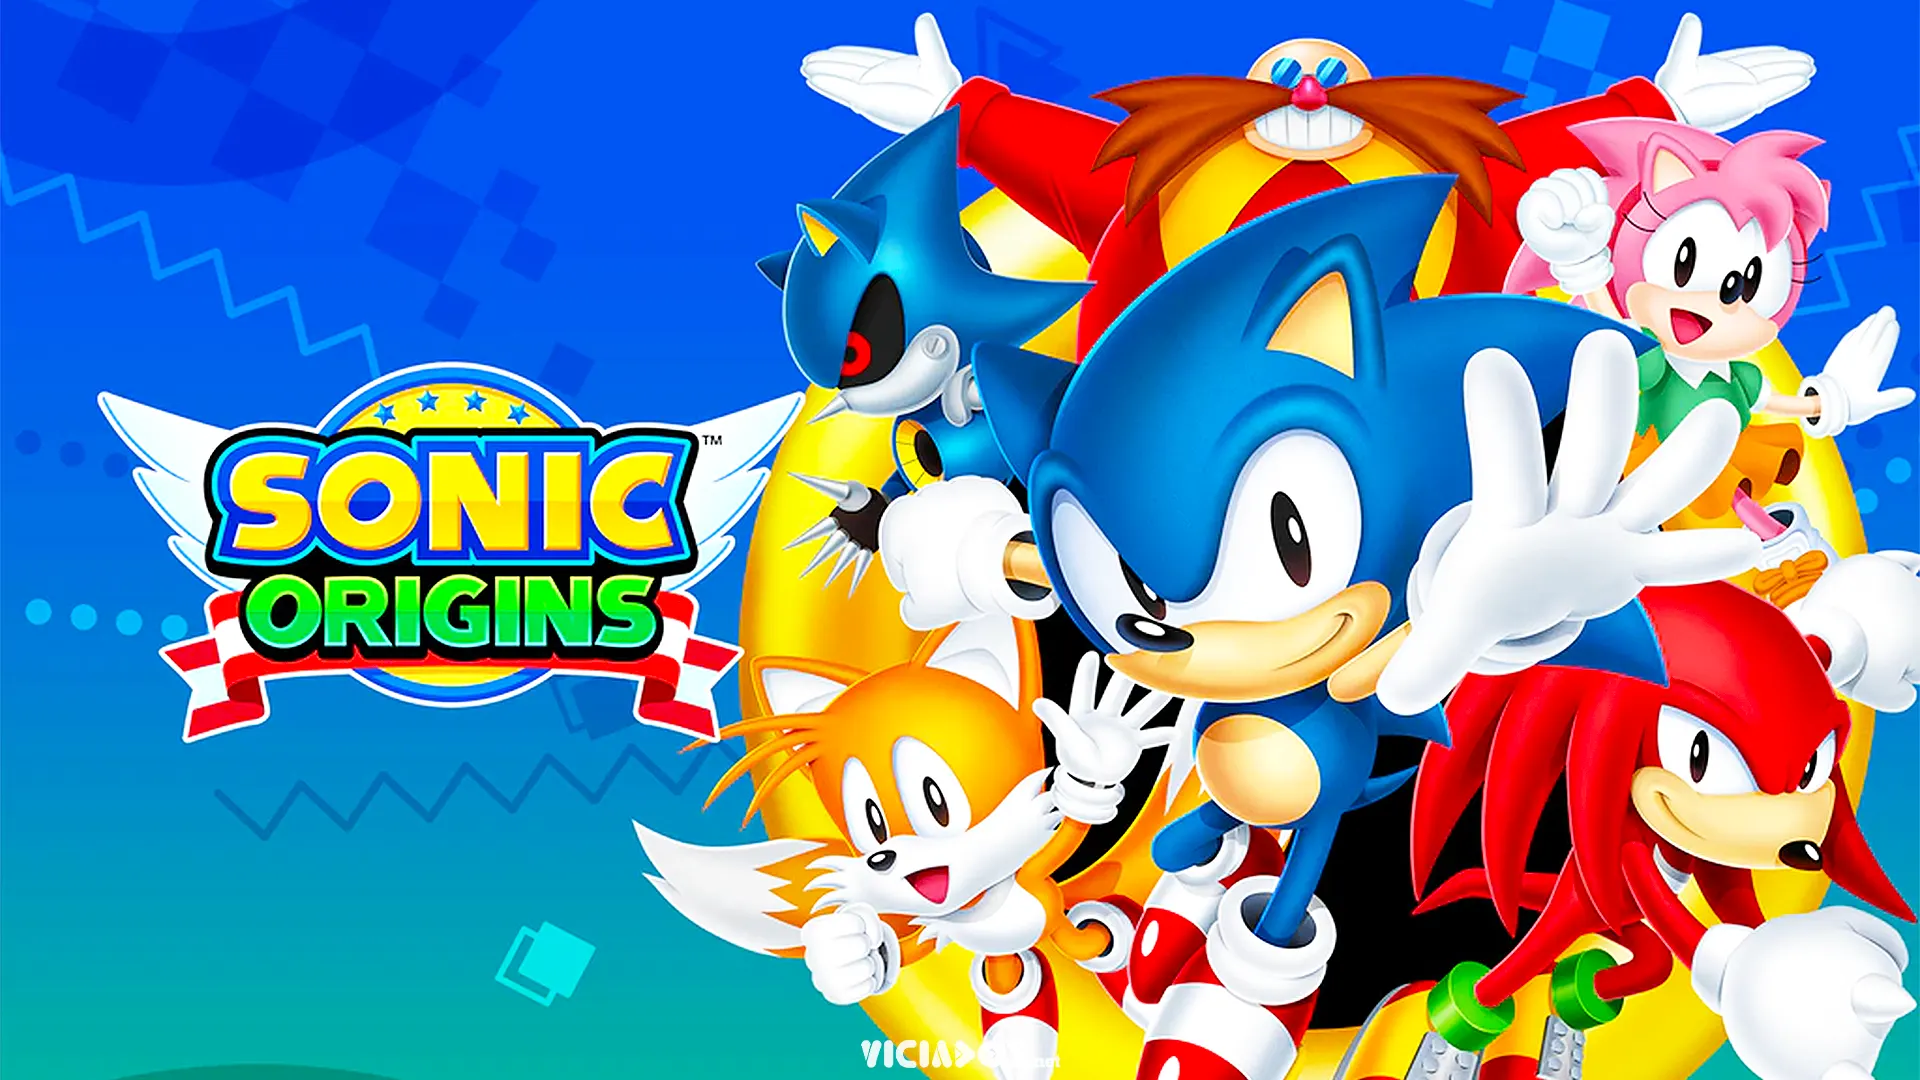 Capa de Sonic Origins vaza antes da hora; Confira! 2022 Viciados